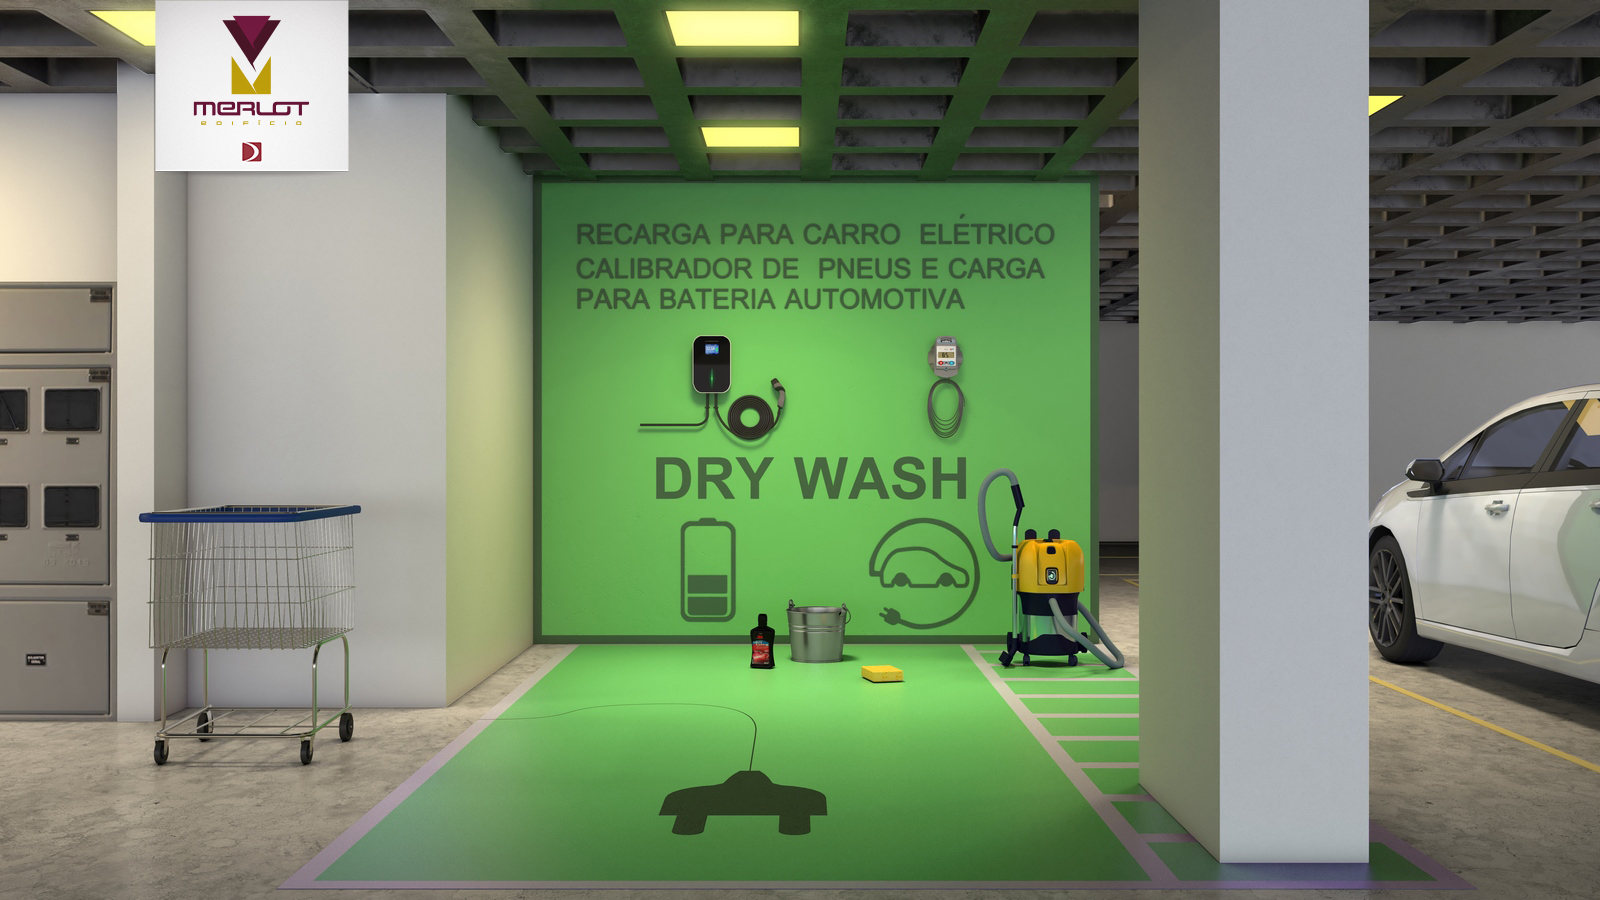 29_merlot carros eletricos dry wash (Cópia)